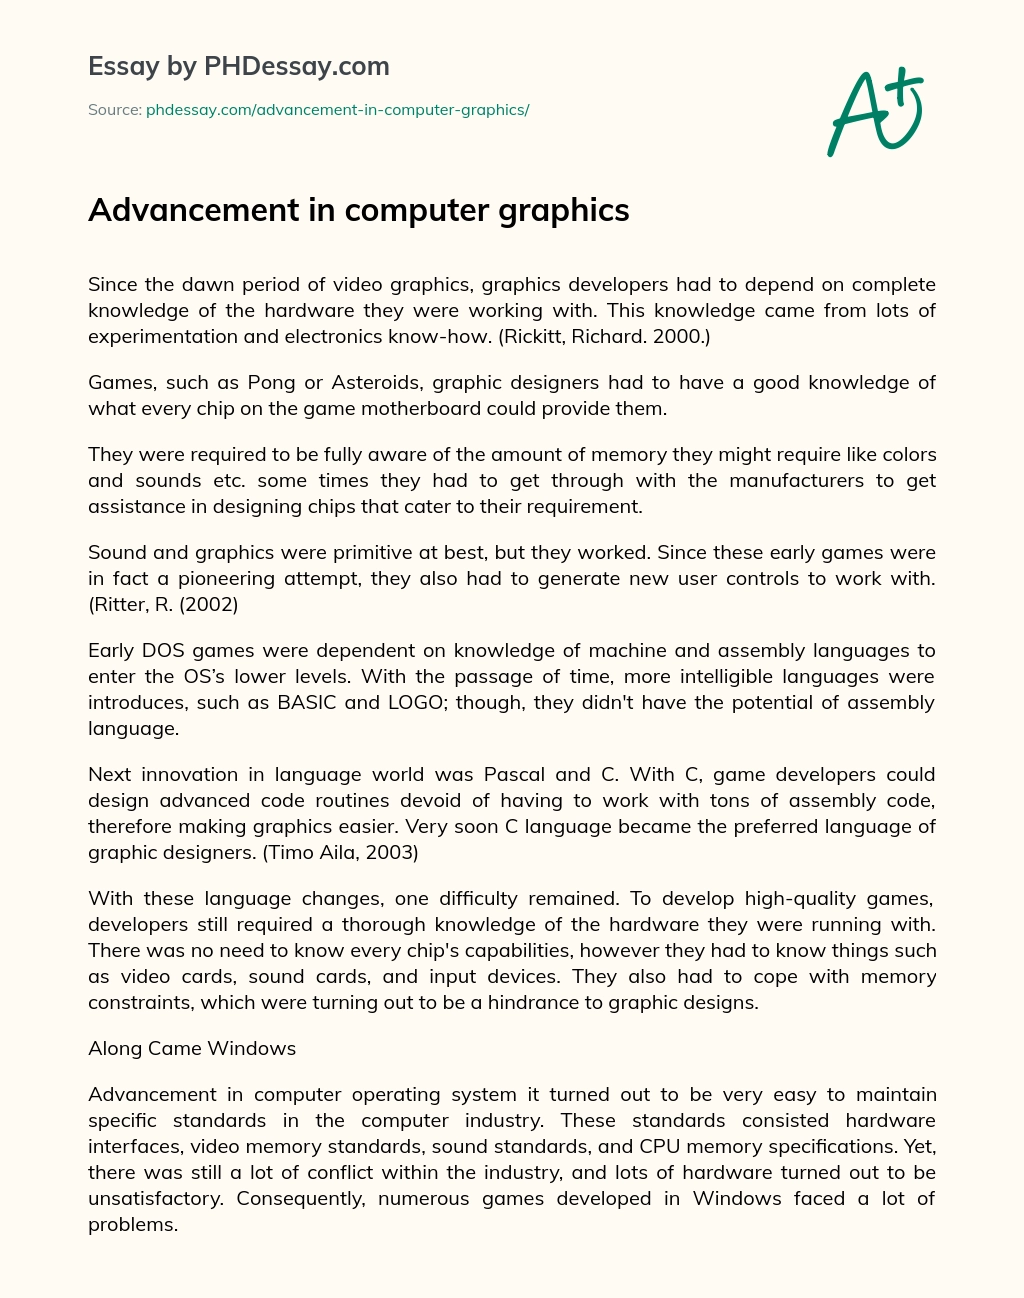 Advancement in Computer Graphics essay